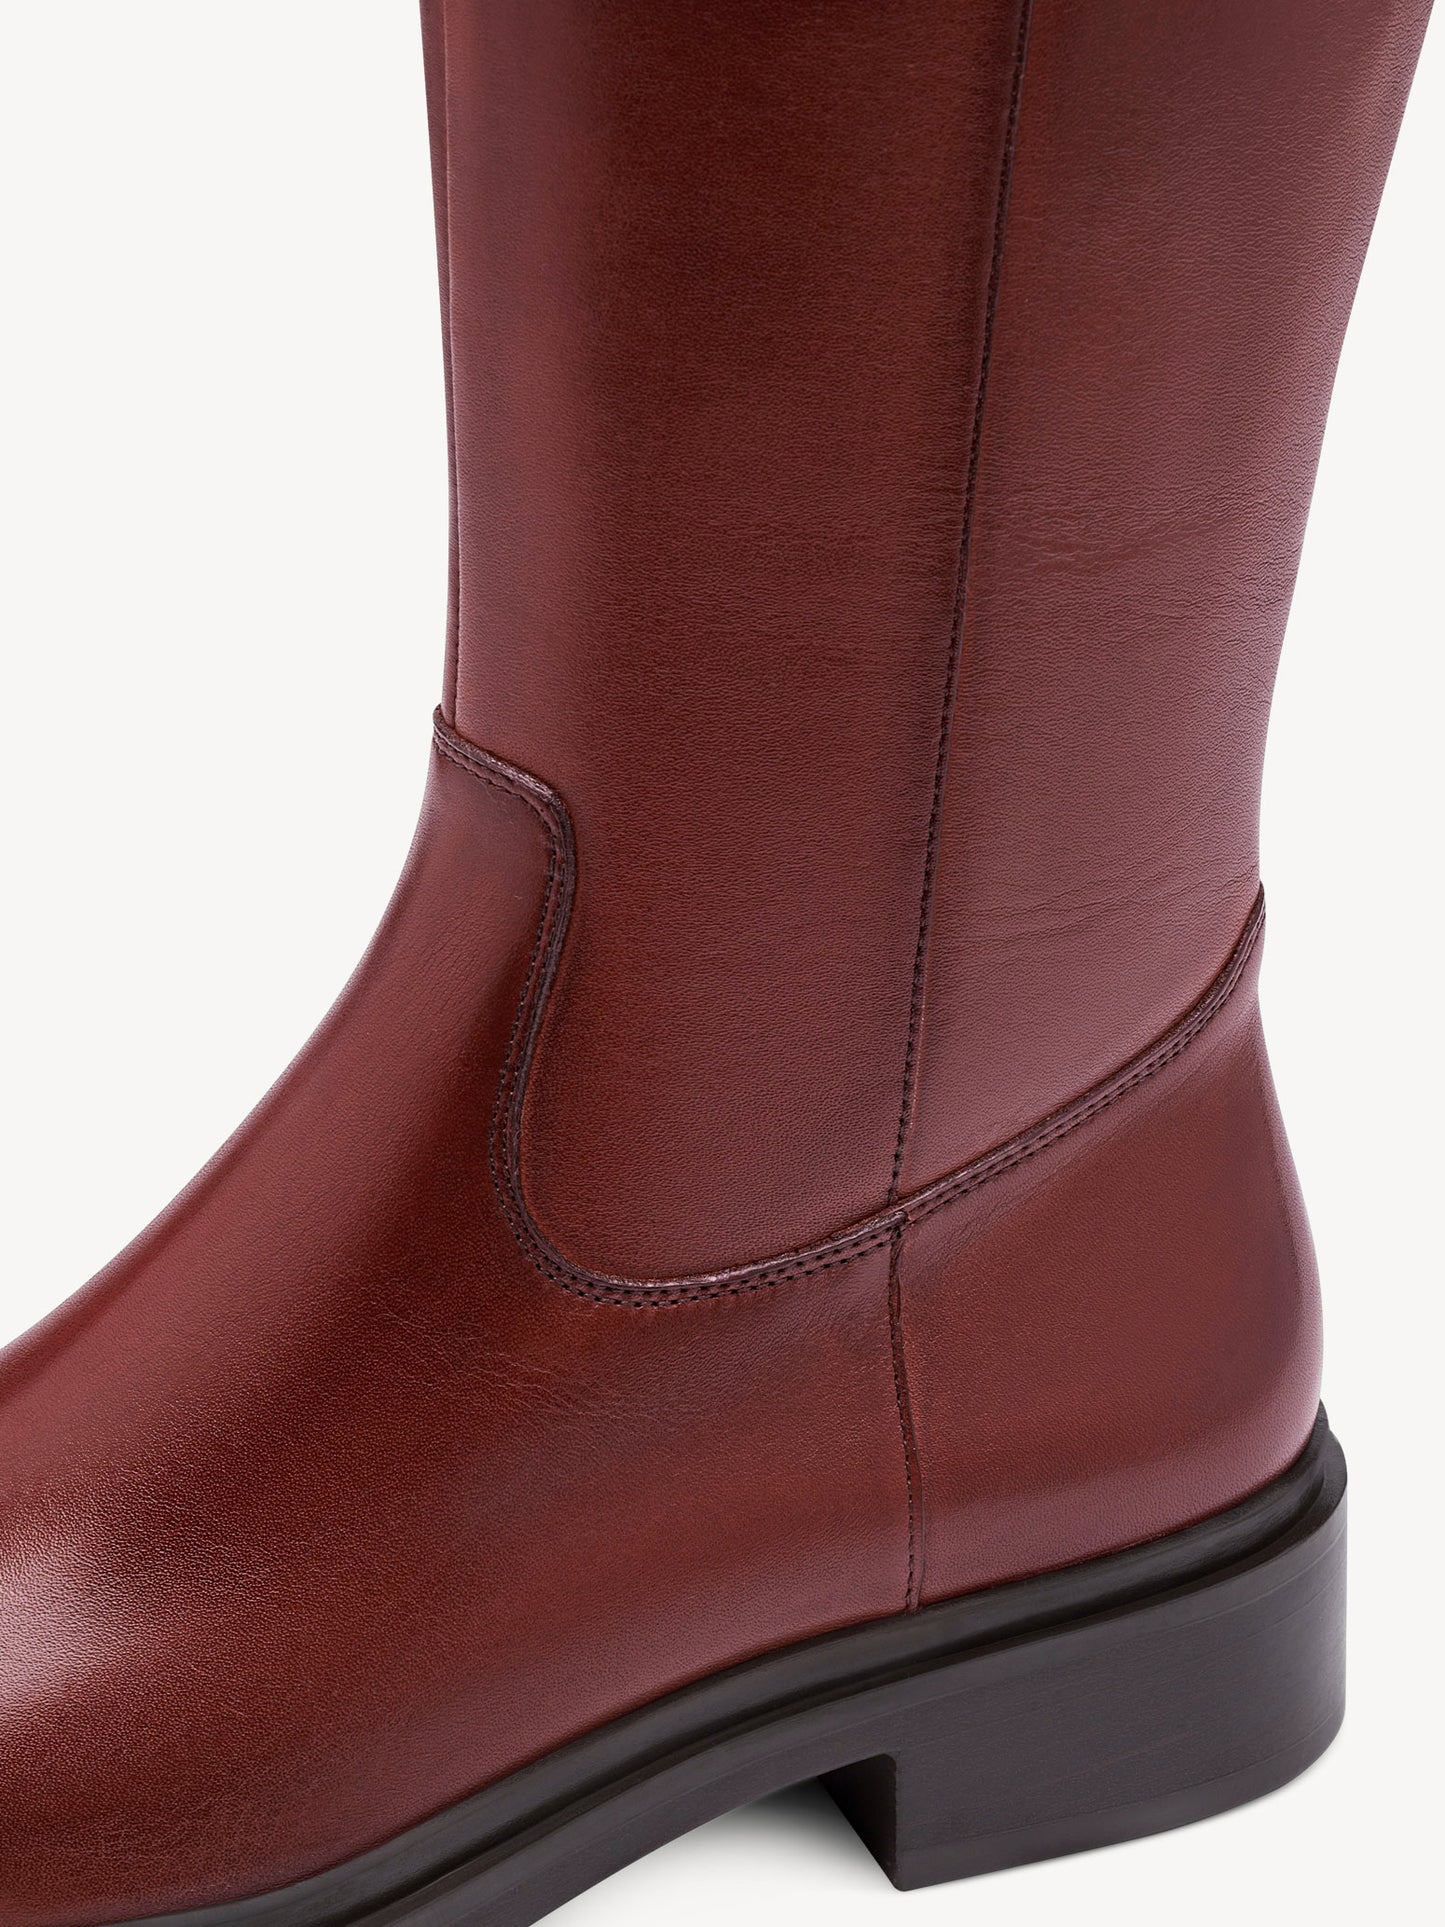 Tamaris Tall Leather Boot in Cognac